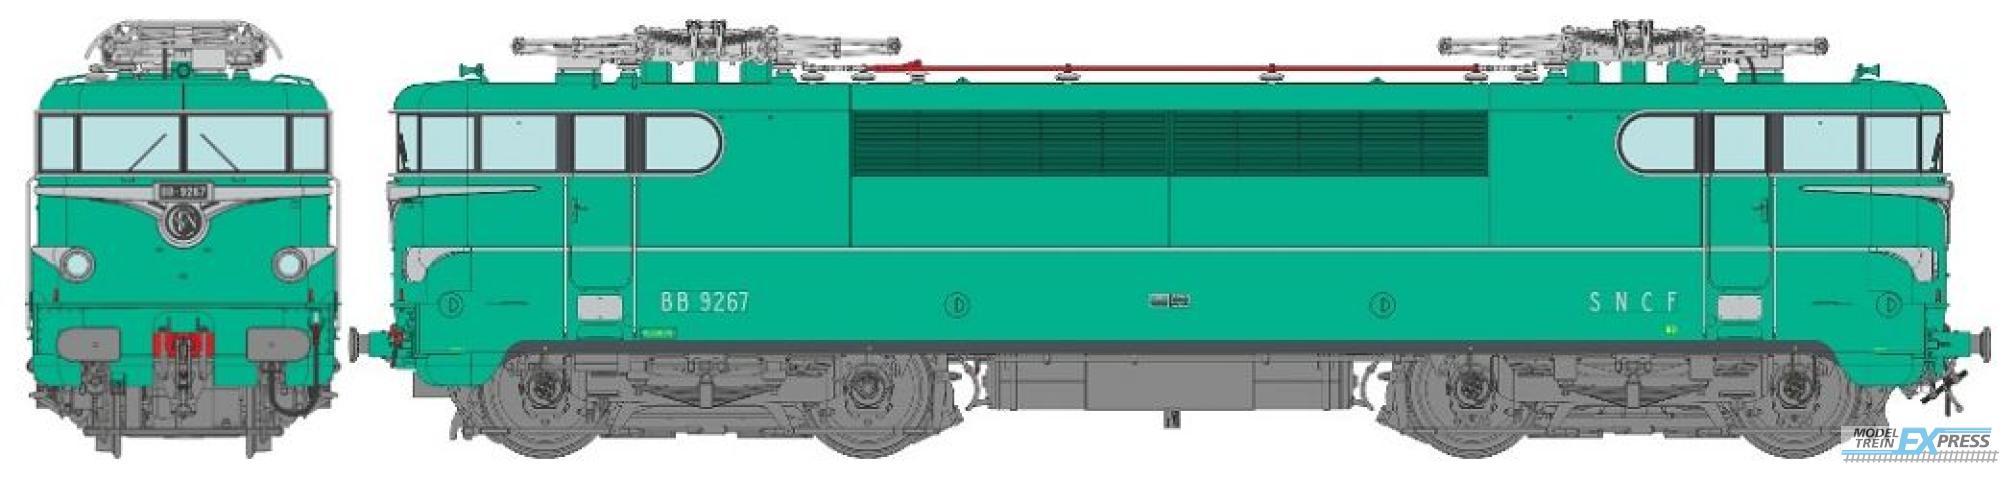 REE models MB-081SAC BB 9267 Origin Green, Lyon-Mouche, Plate MISTRAL, Era III - AC Sound Functional Pantos (3 tracks)